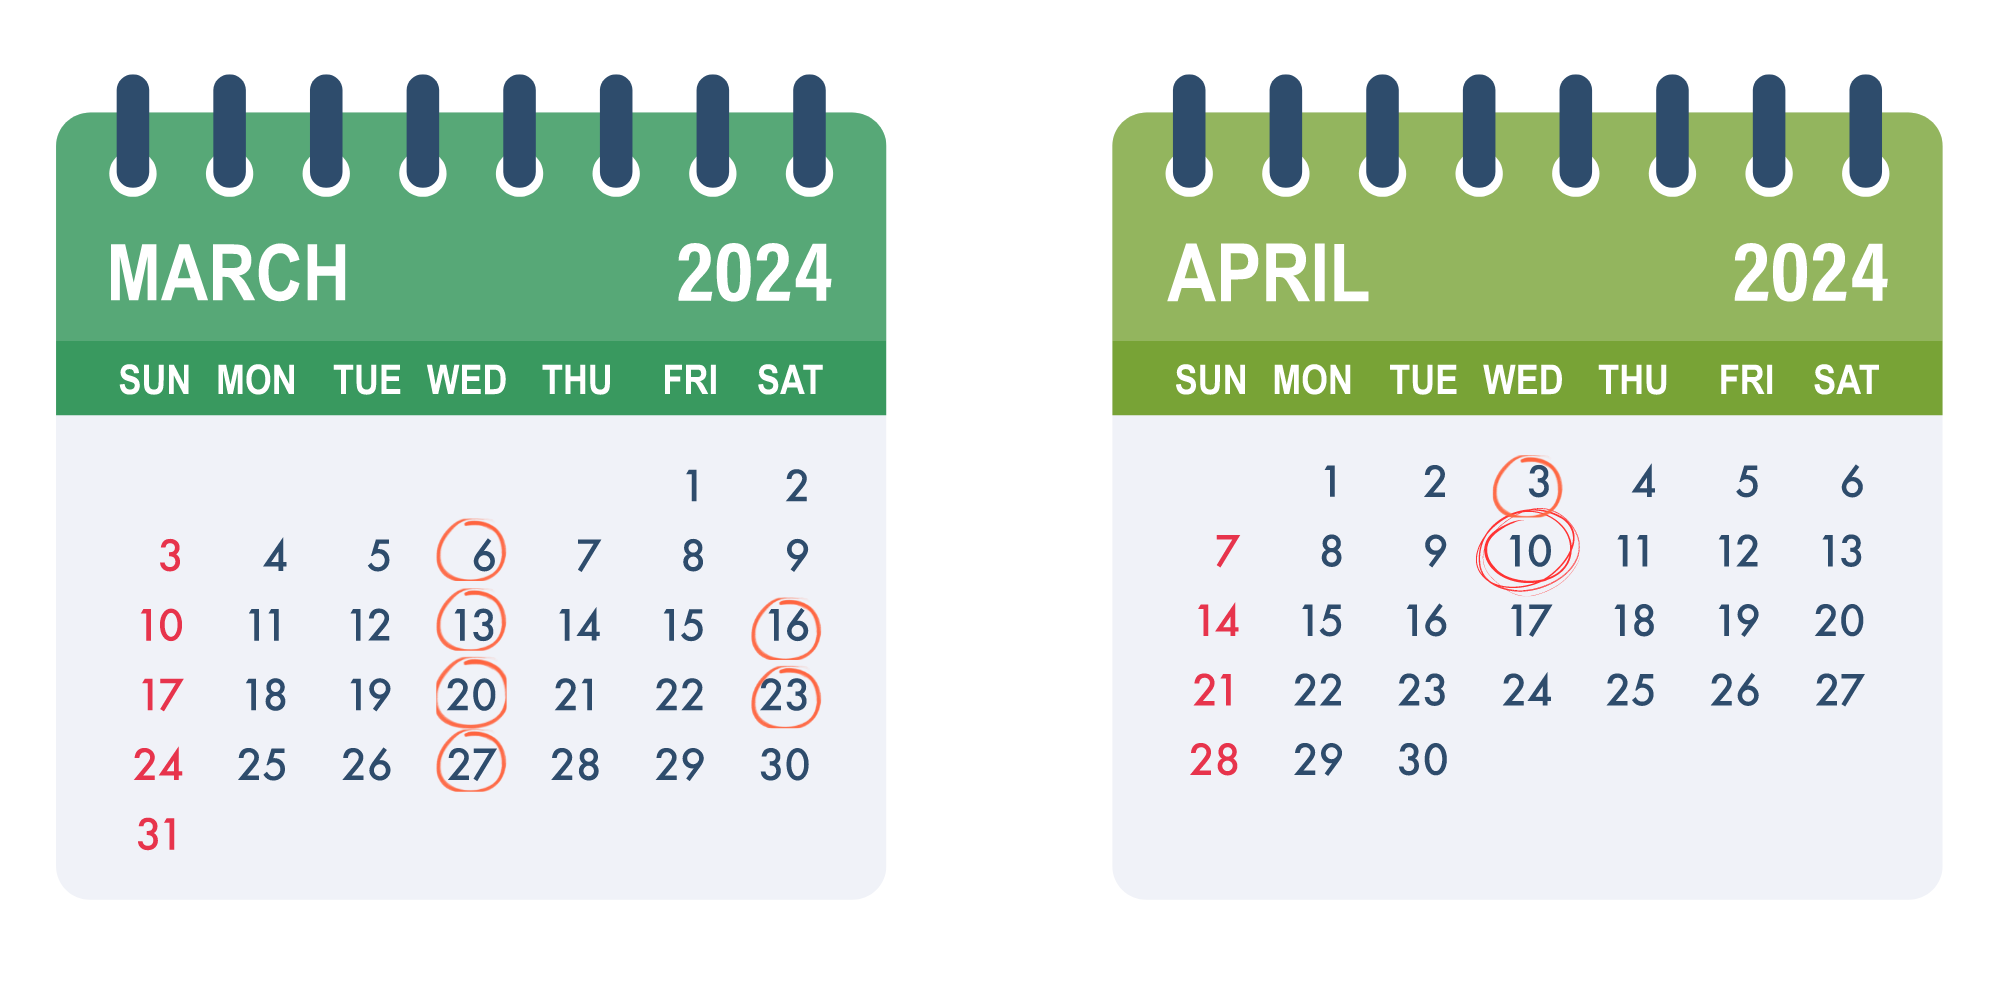 Calendar of 2024 Academy dates marked